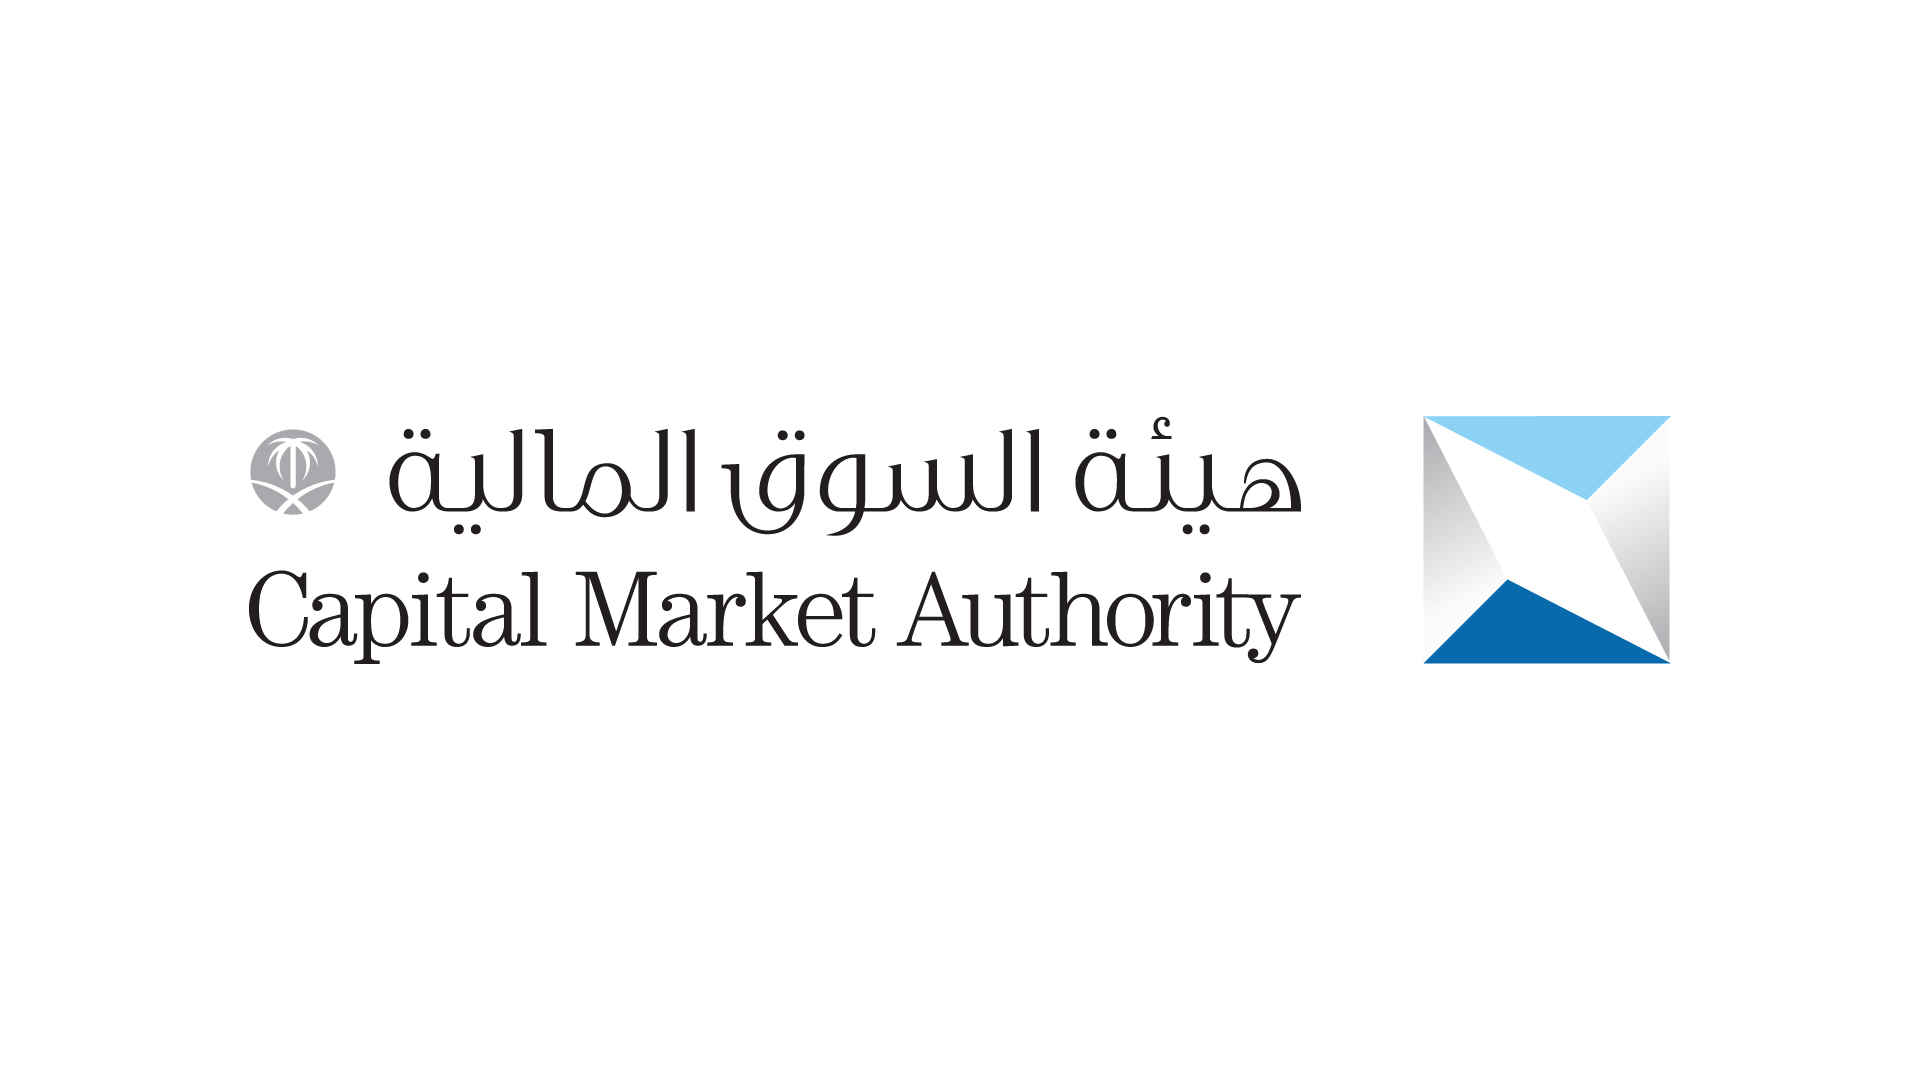 Saudi Capital Market Authority Logo (CMA)